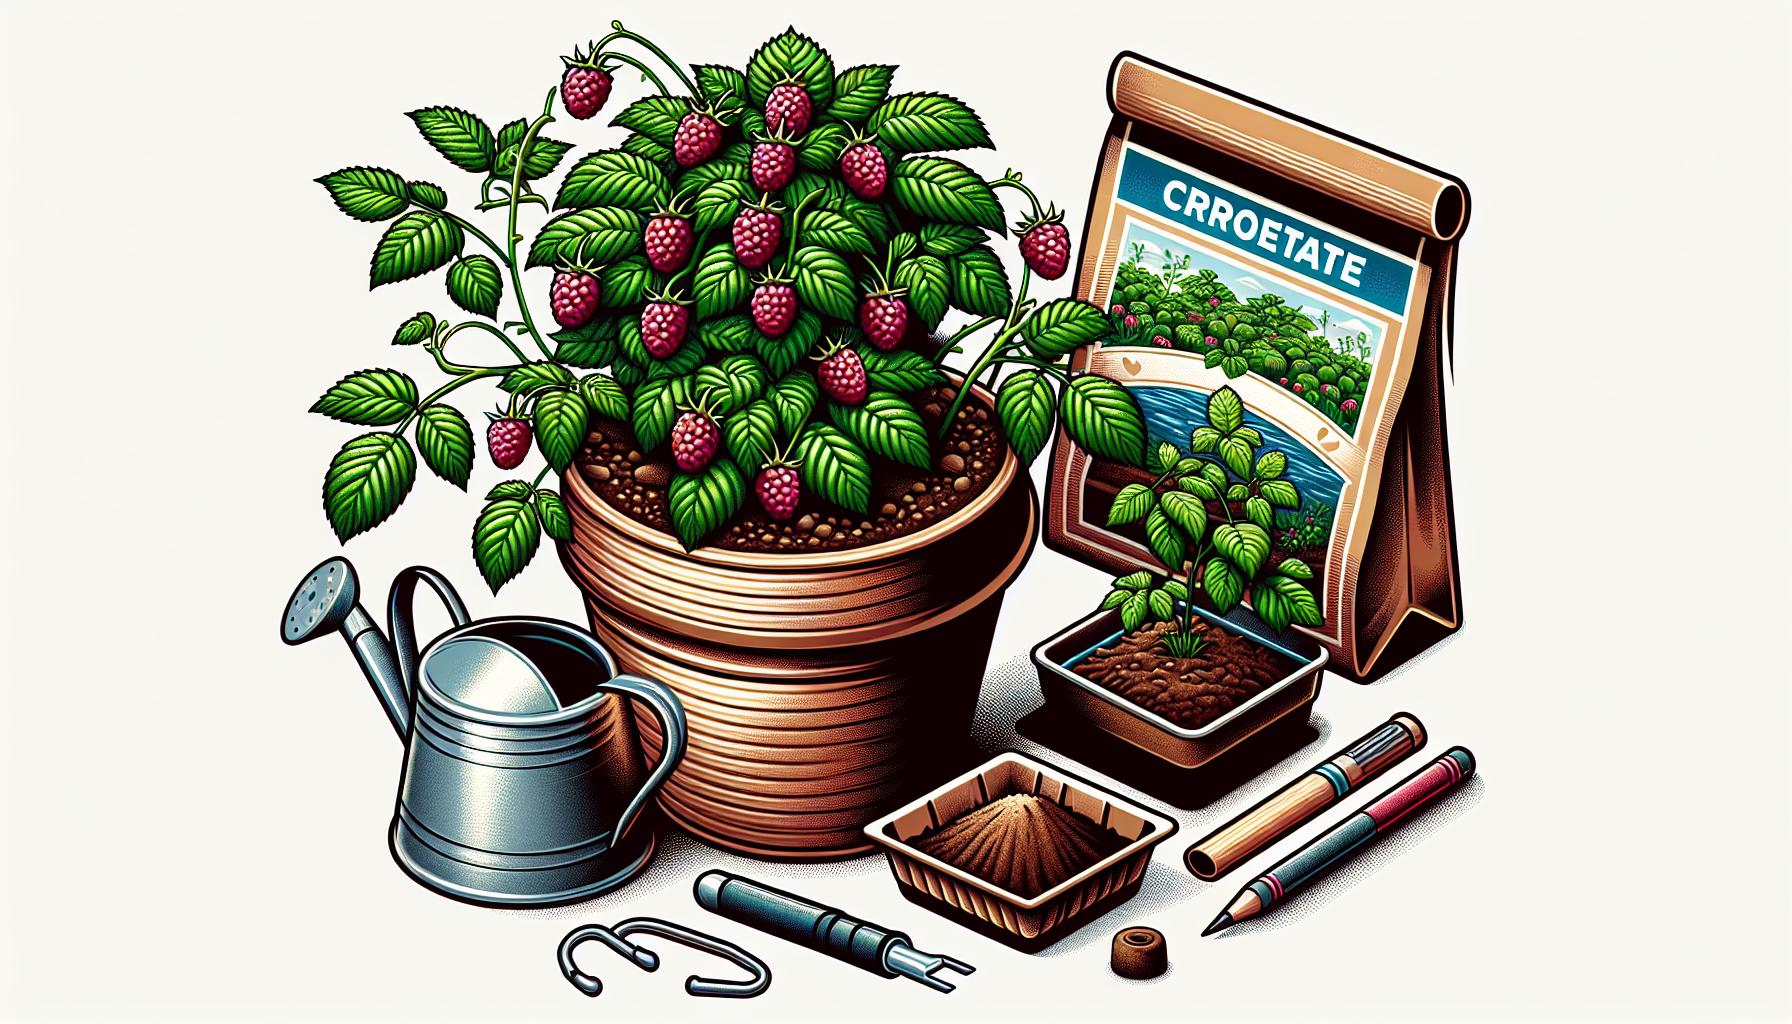 Gardening Tools and Plants Illustration